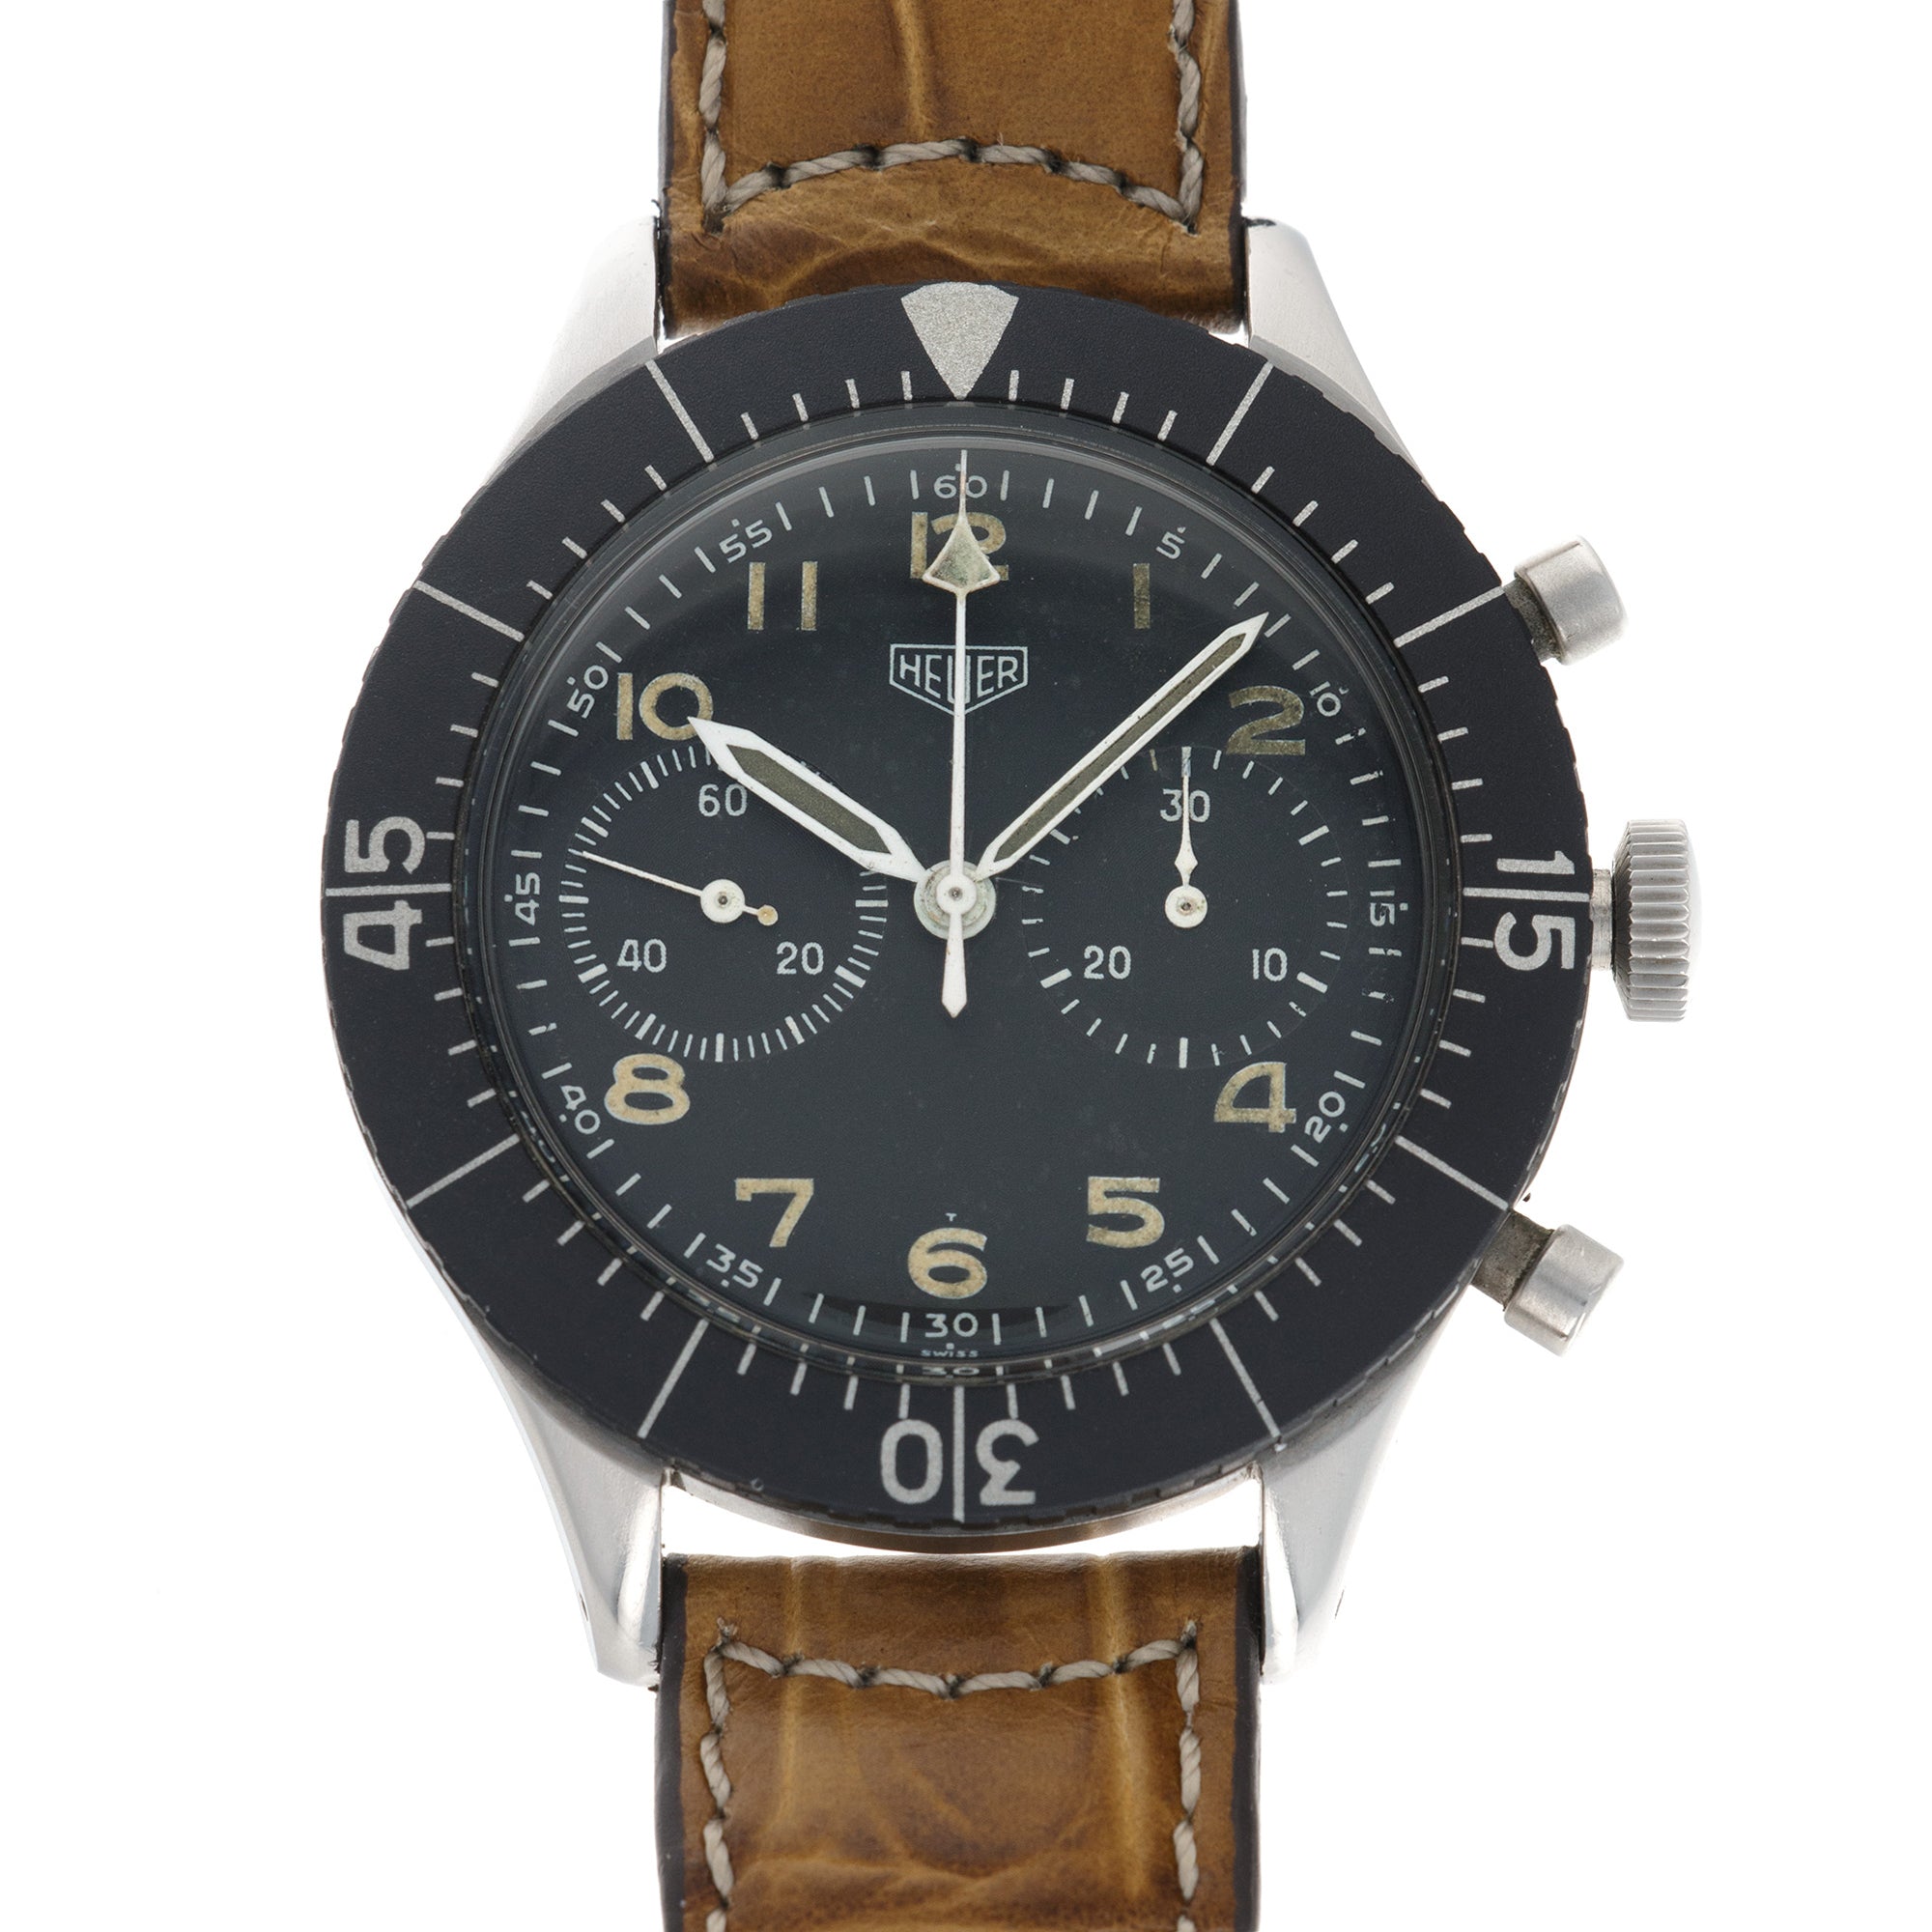 Heuer - Heuer Bundeswehr Military Chronograph Watch Ref. 1550 - The Keystone Watches